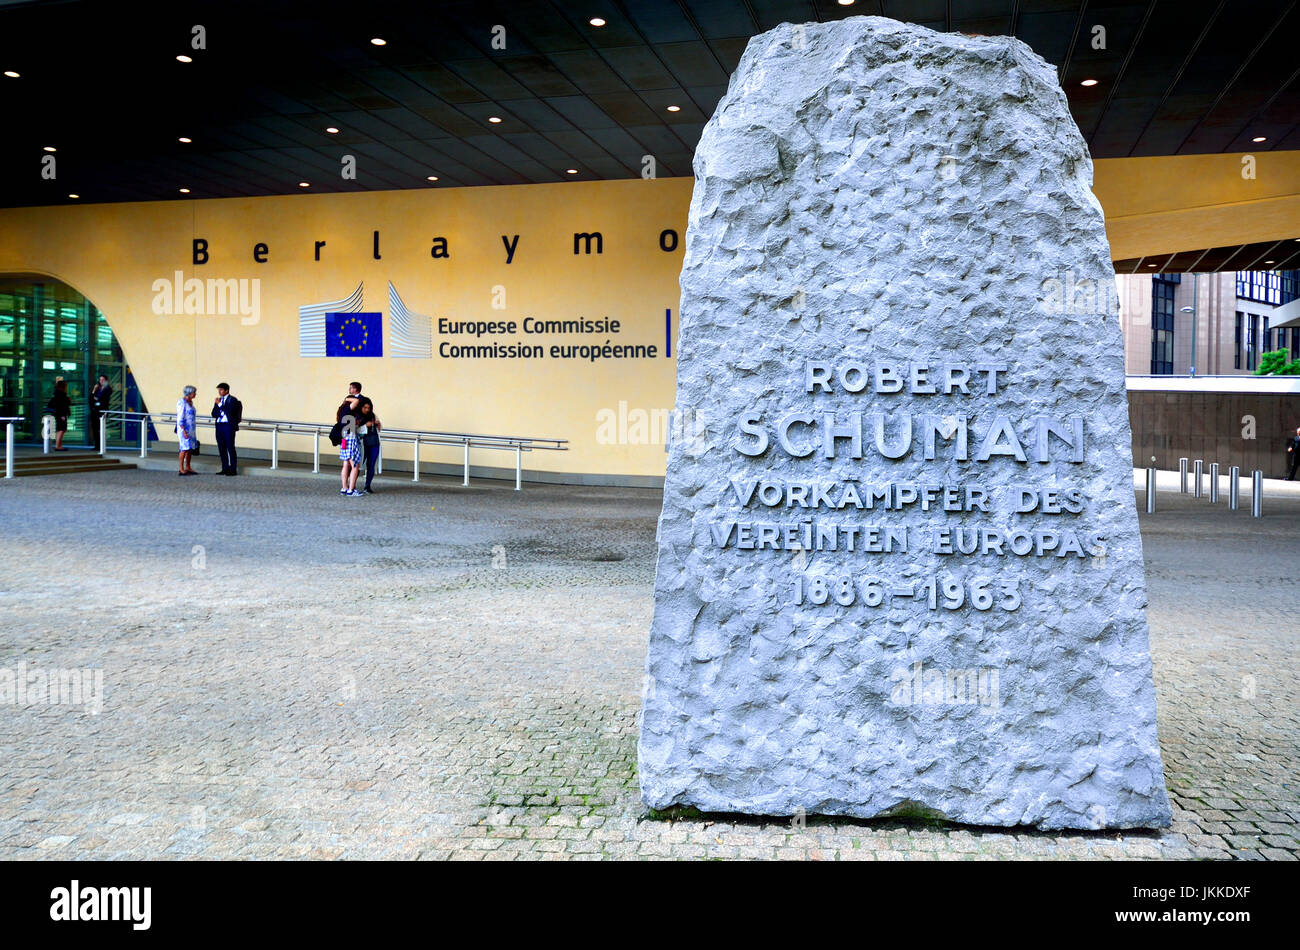 Brussels, Belgium. European Commission Berlaymont building. Monument to Robert Schuman 'Robert Schuman' Promotor of Unified Europe 1886-1963' ... Stock Photo